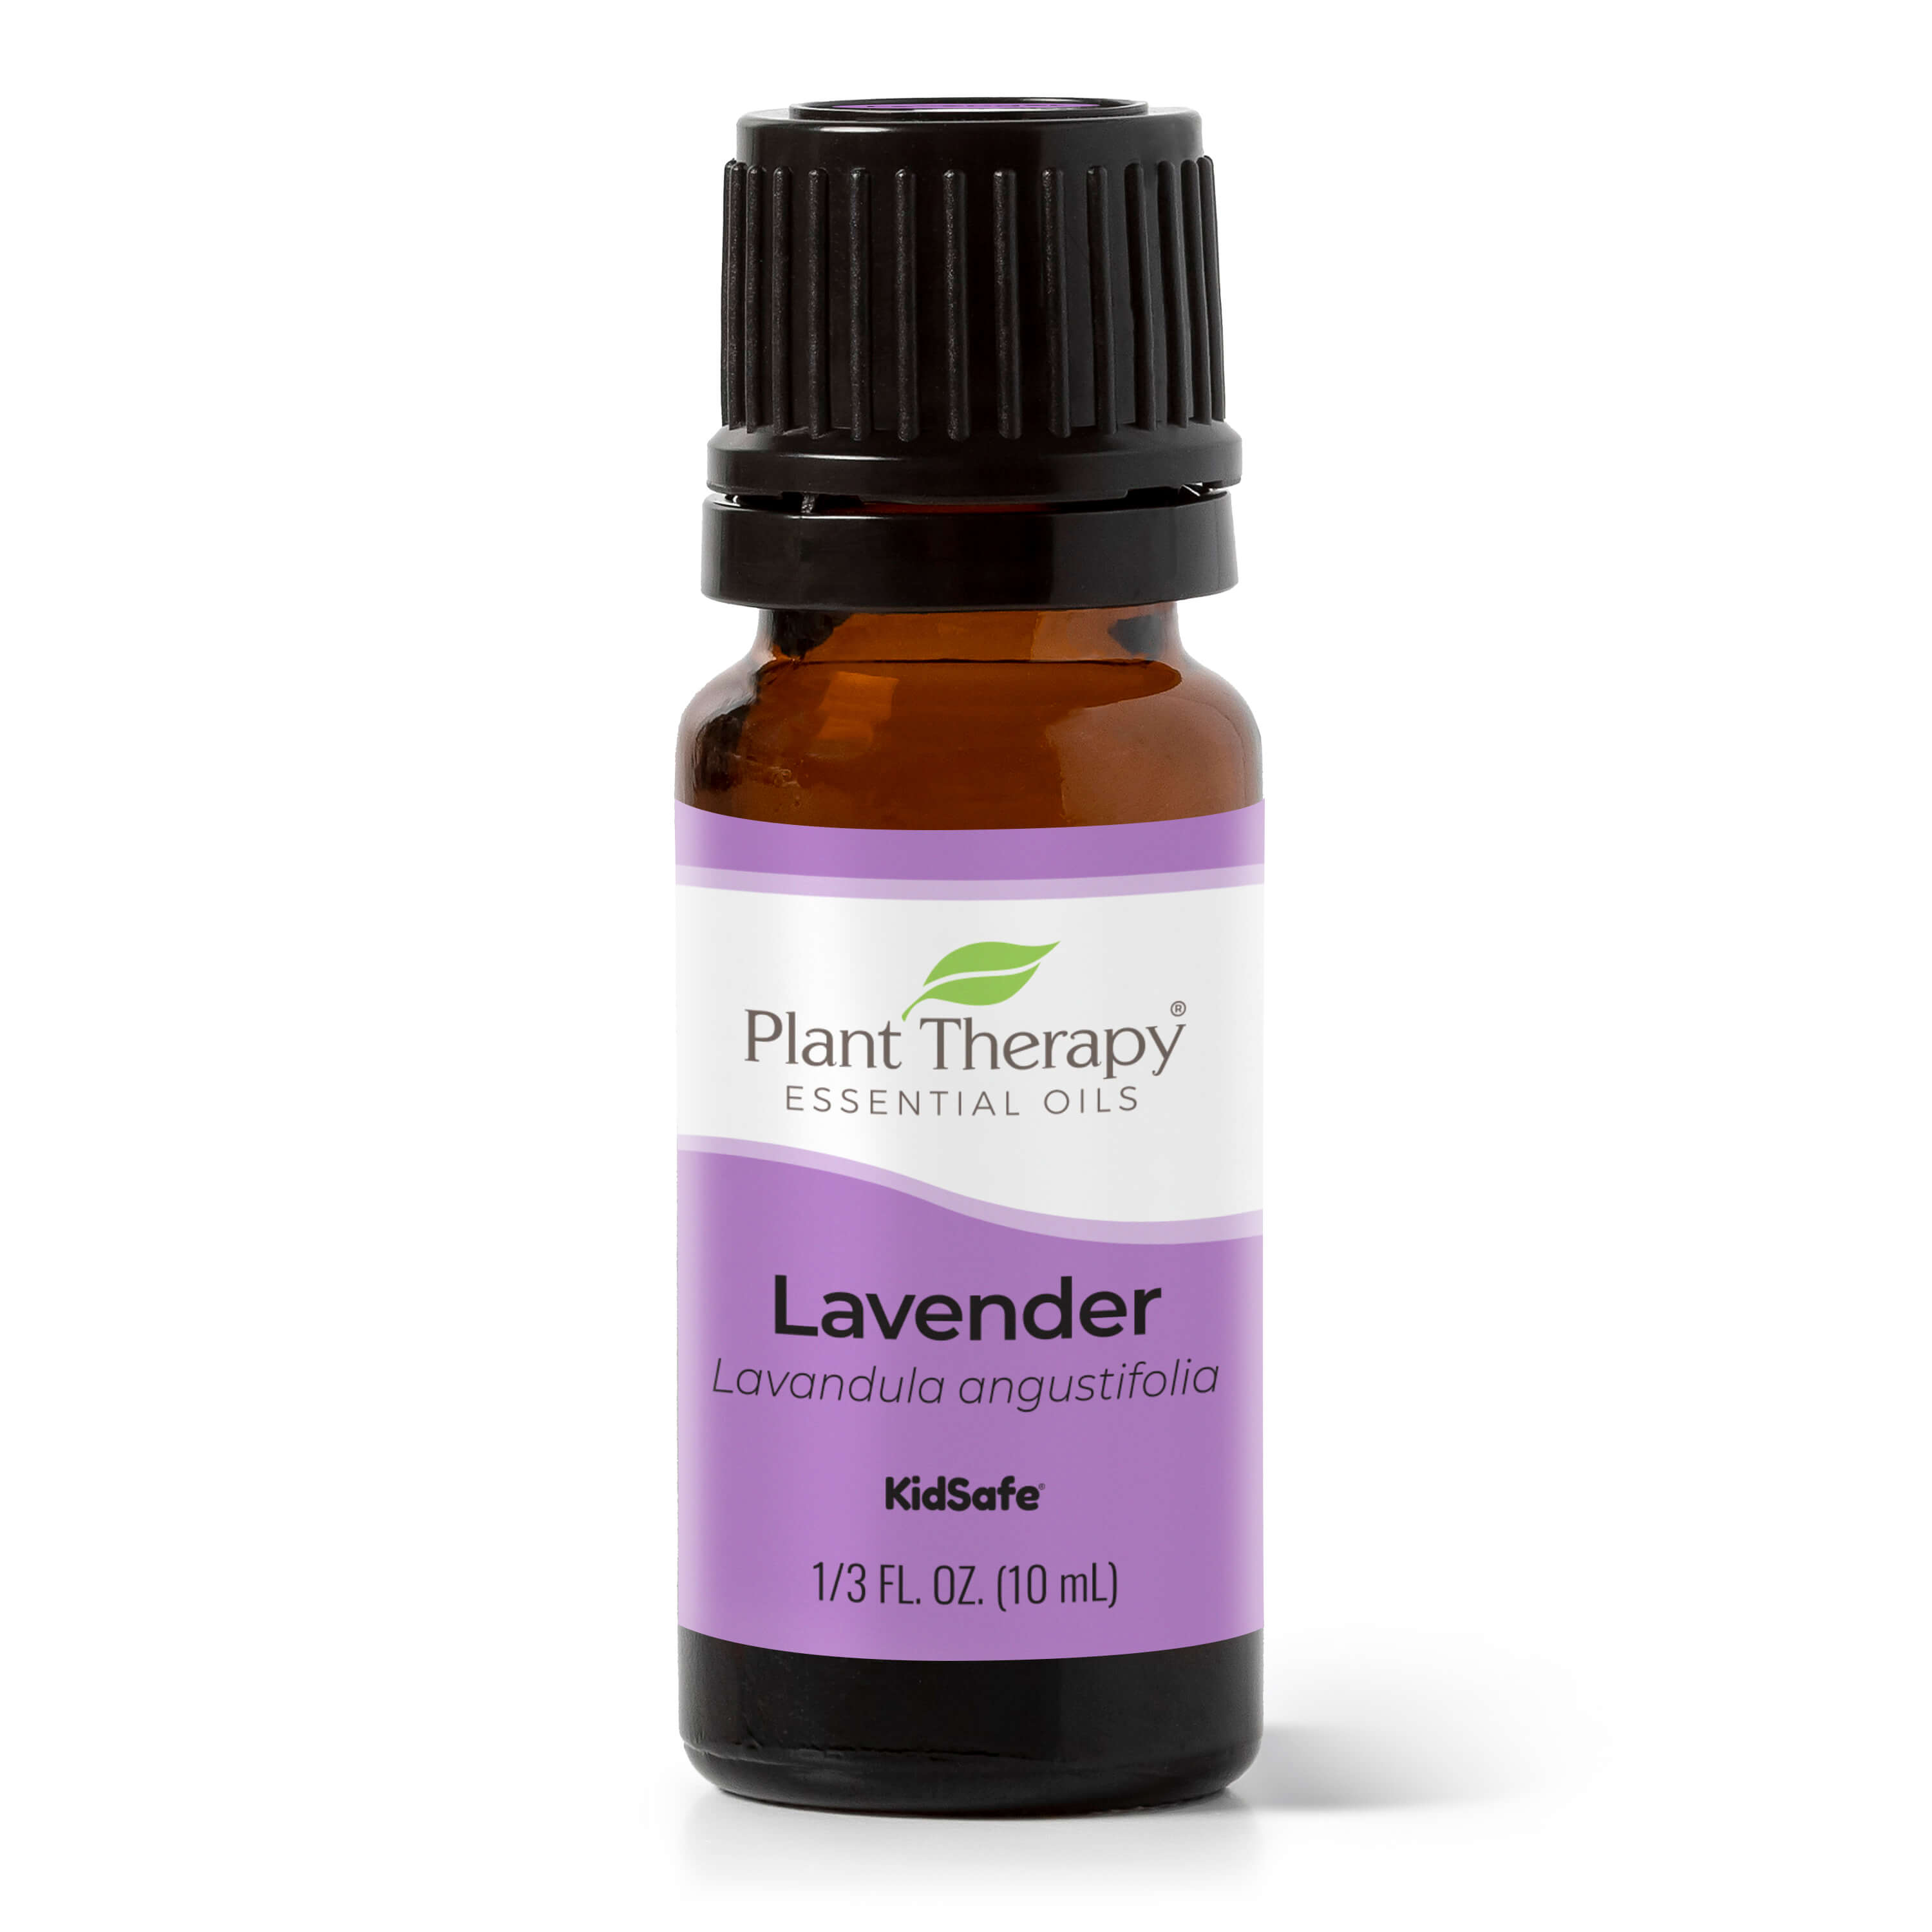 Lavender Essential Oil & Scented Oils